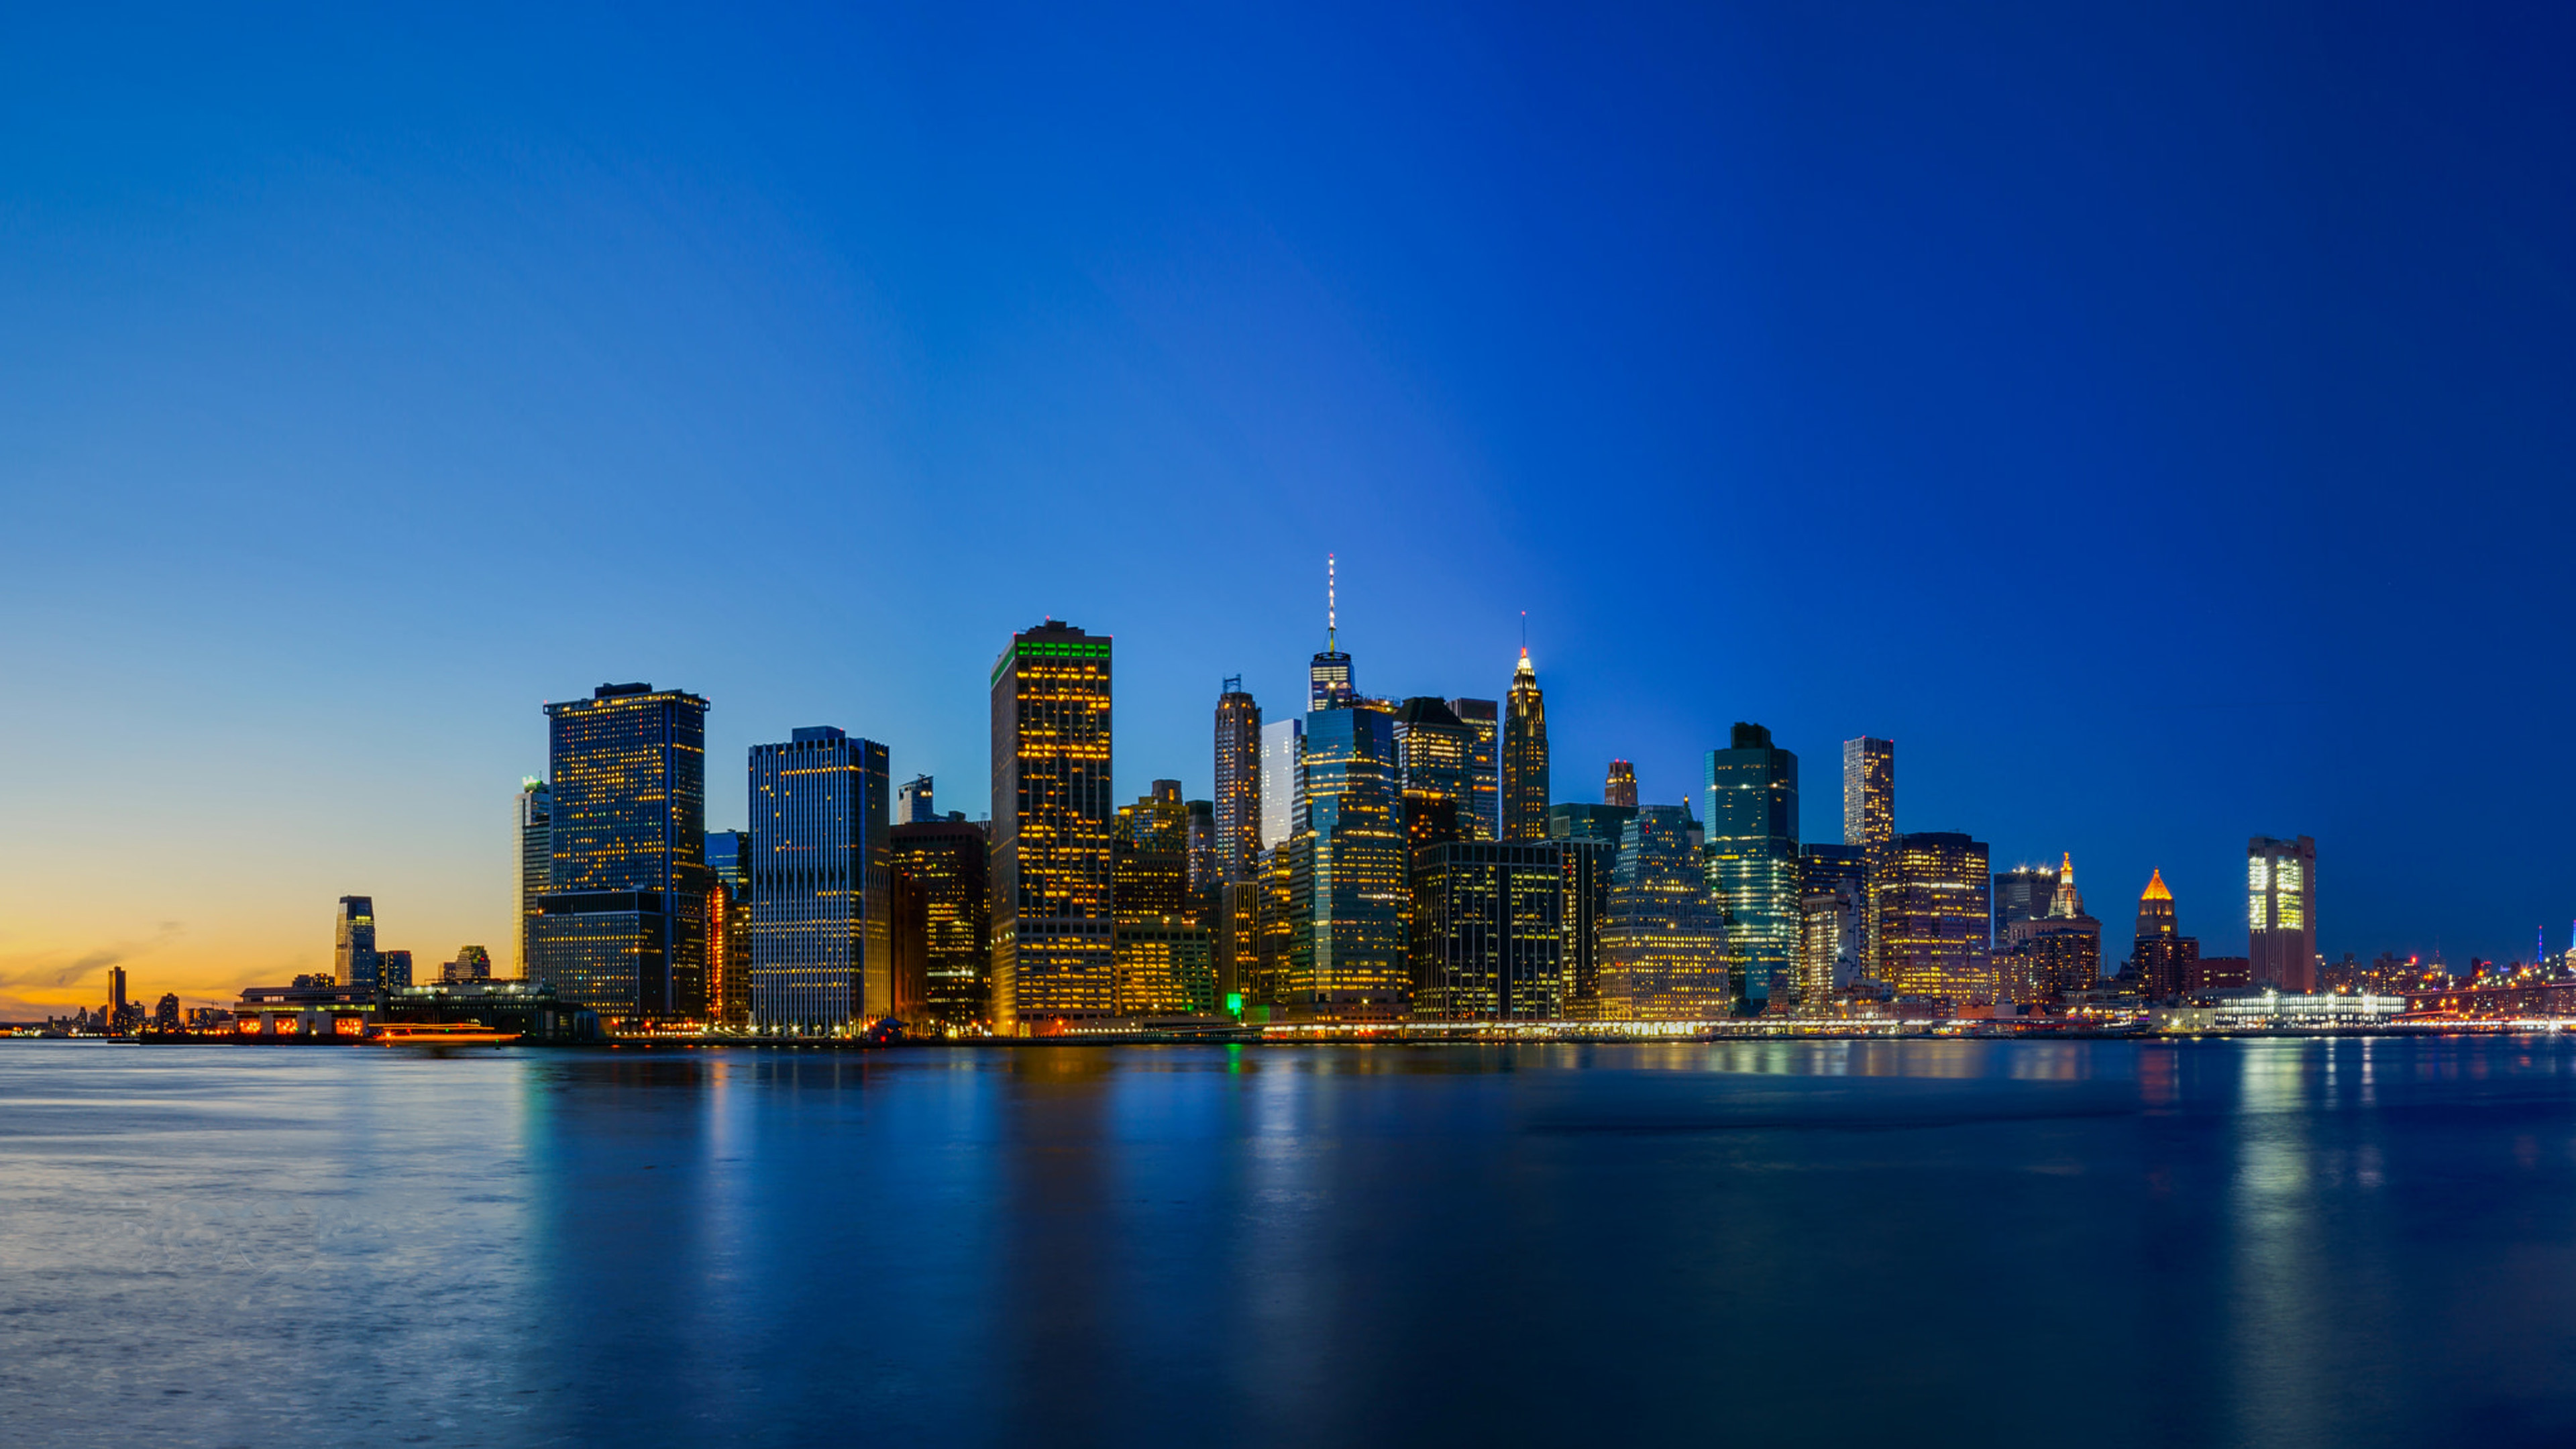 Brooklyn Bridge Park New York City Skyline Best Hd Wallpapers For Desktop Tablets And Mobile